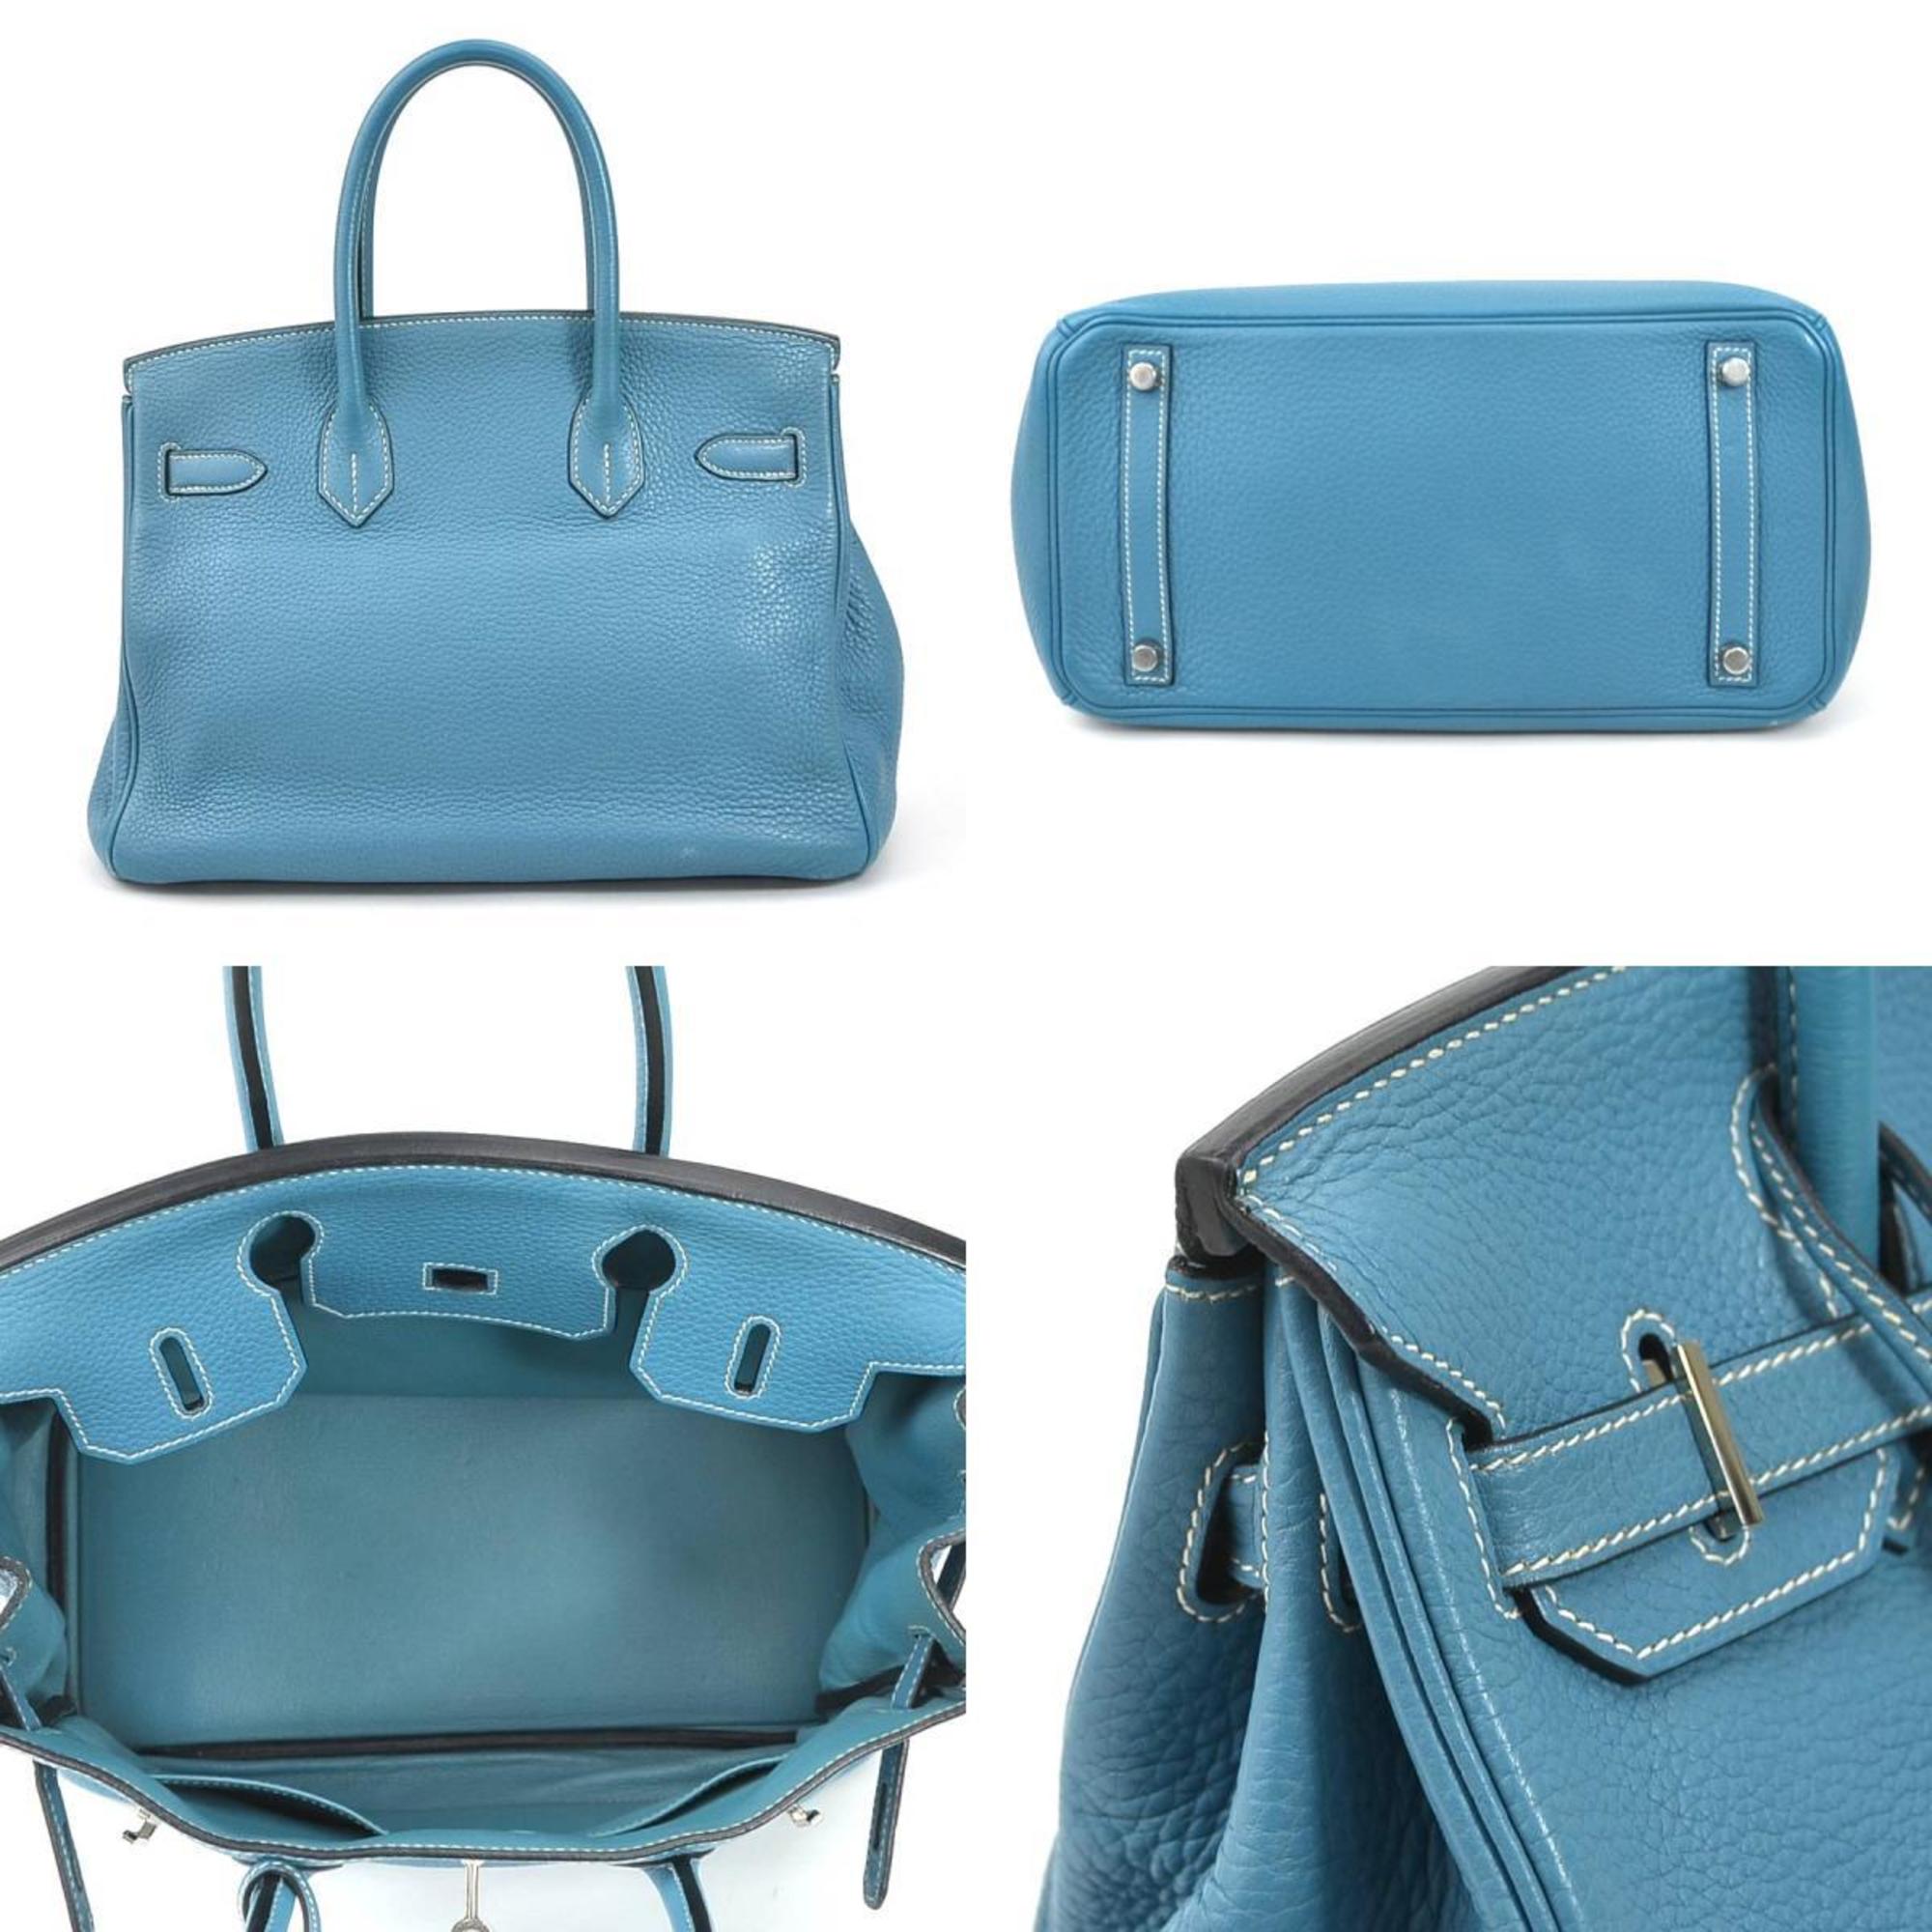 Hermes HERMES Handbag Birkin 30 Taurillon Clemence Turquoise Silver Ladies